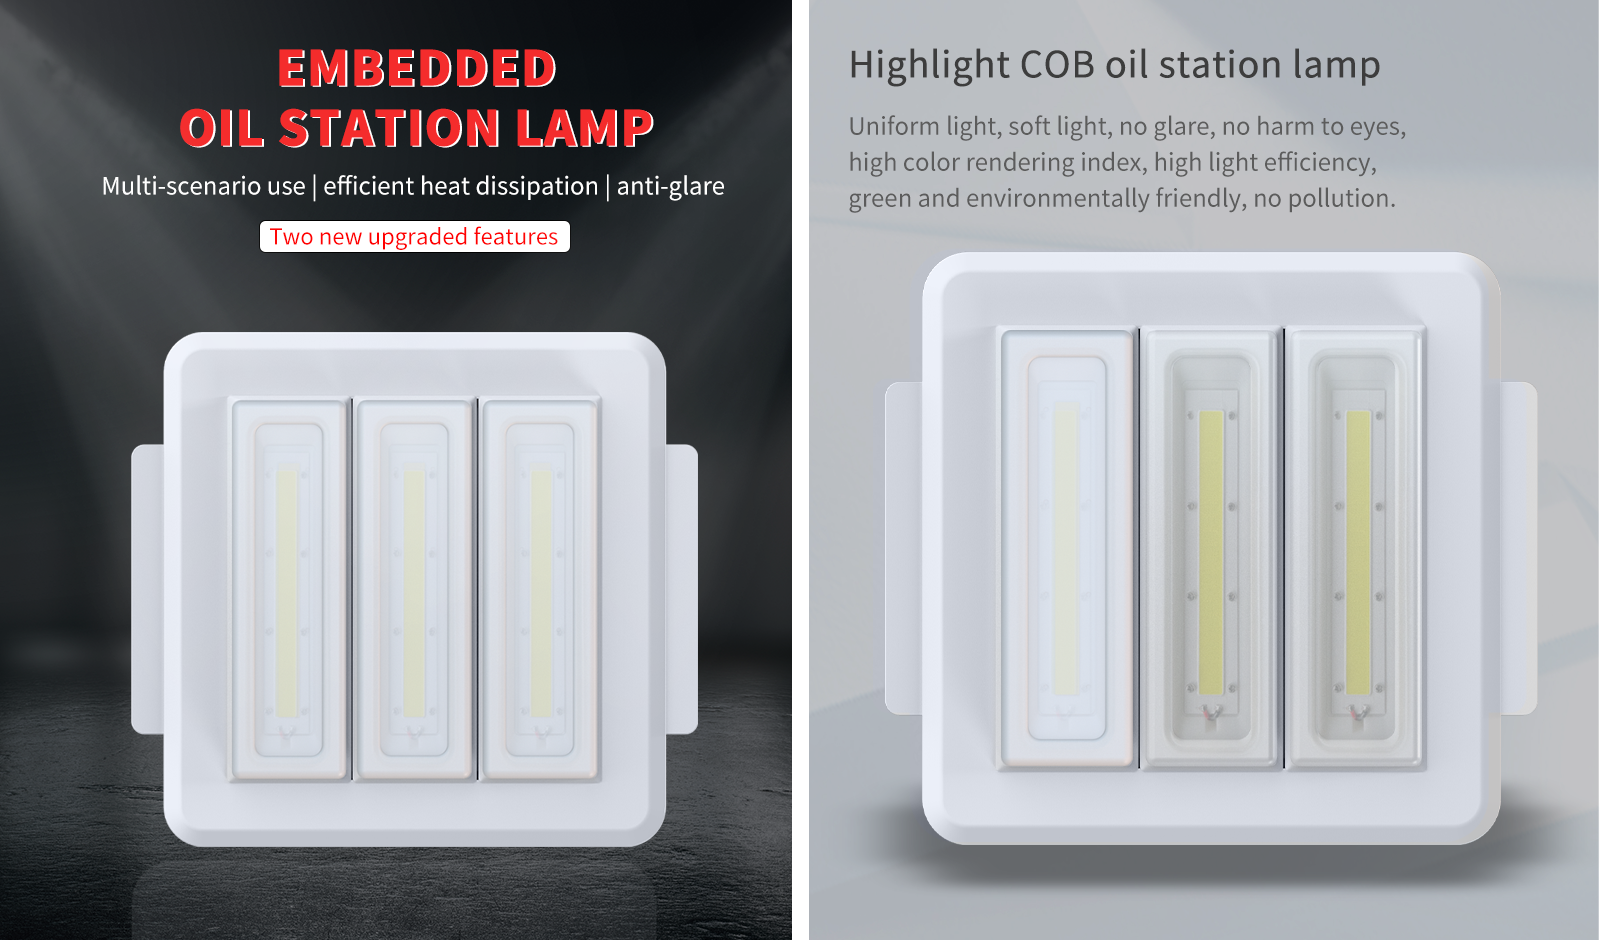 Embedded COB oil station lamp